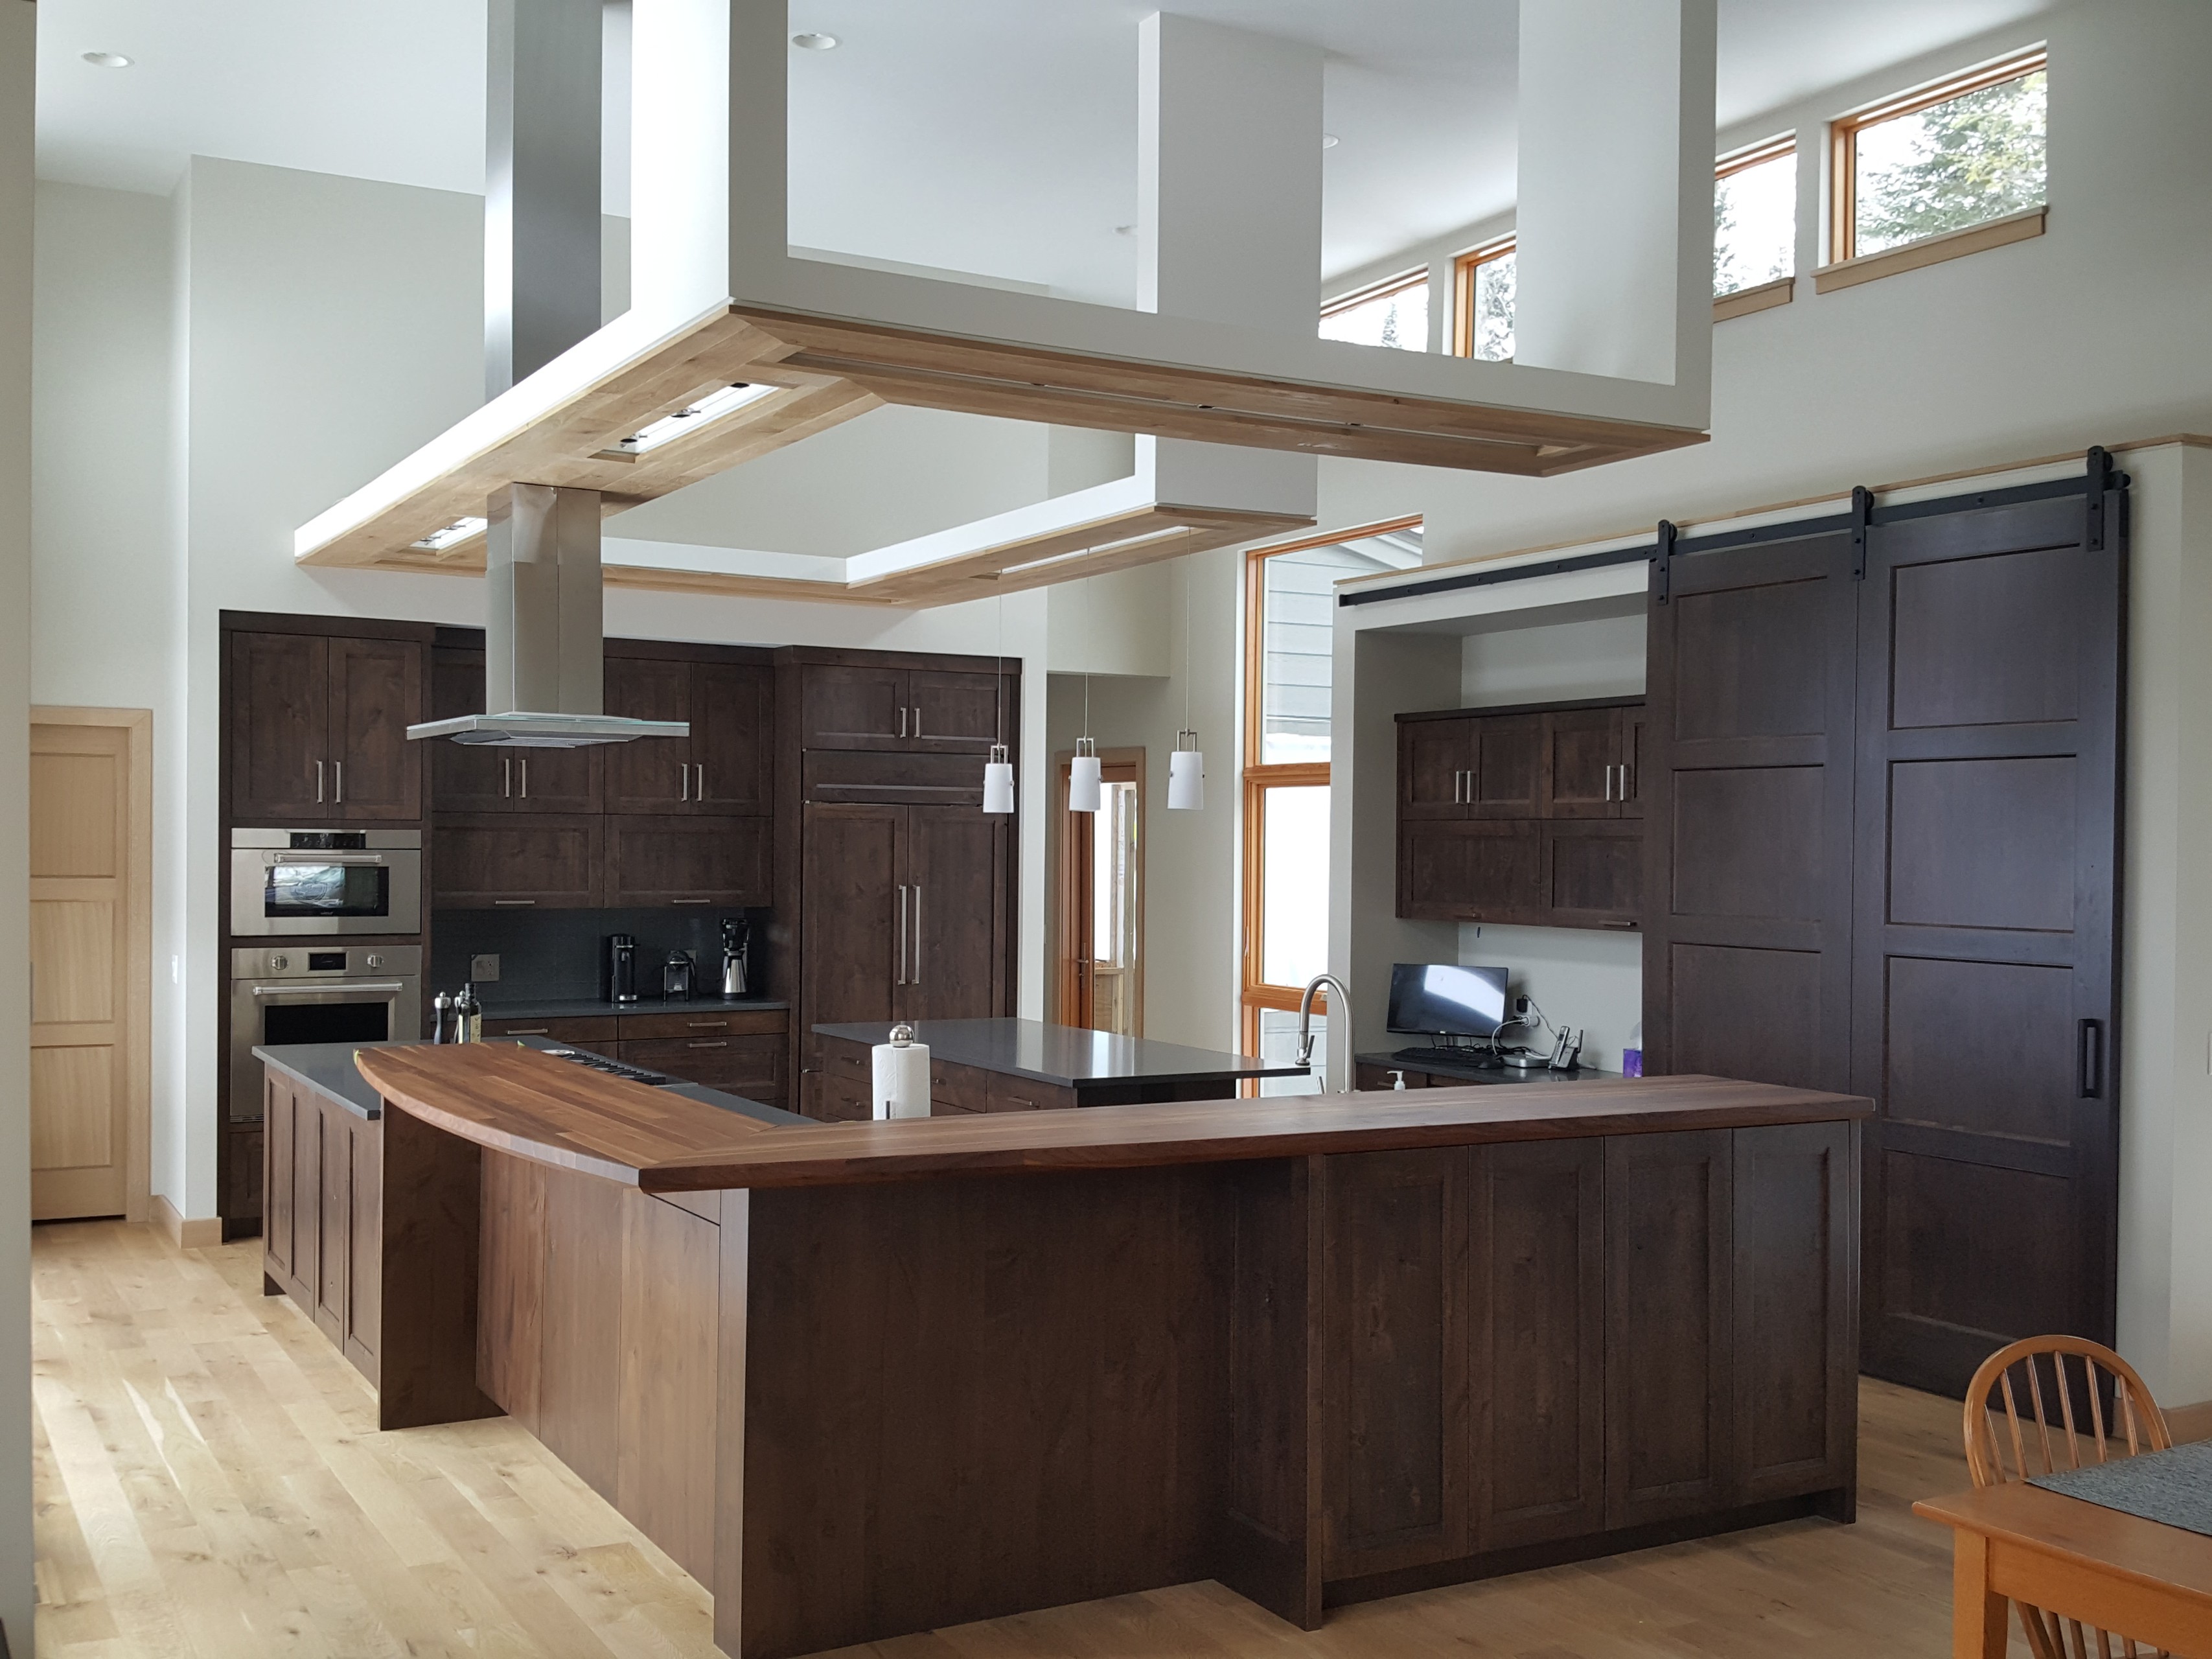 Bayfield - kitchen and lighting design